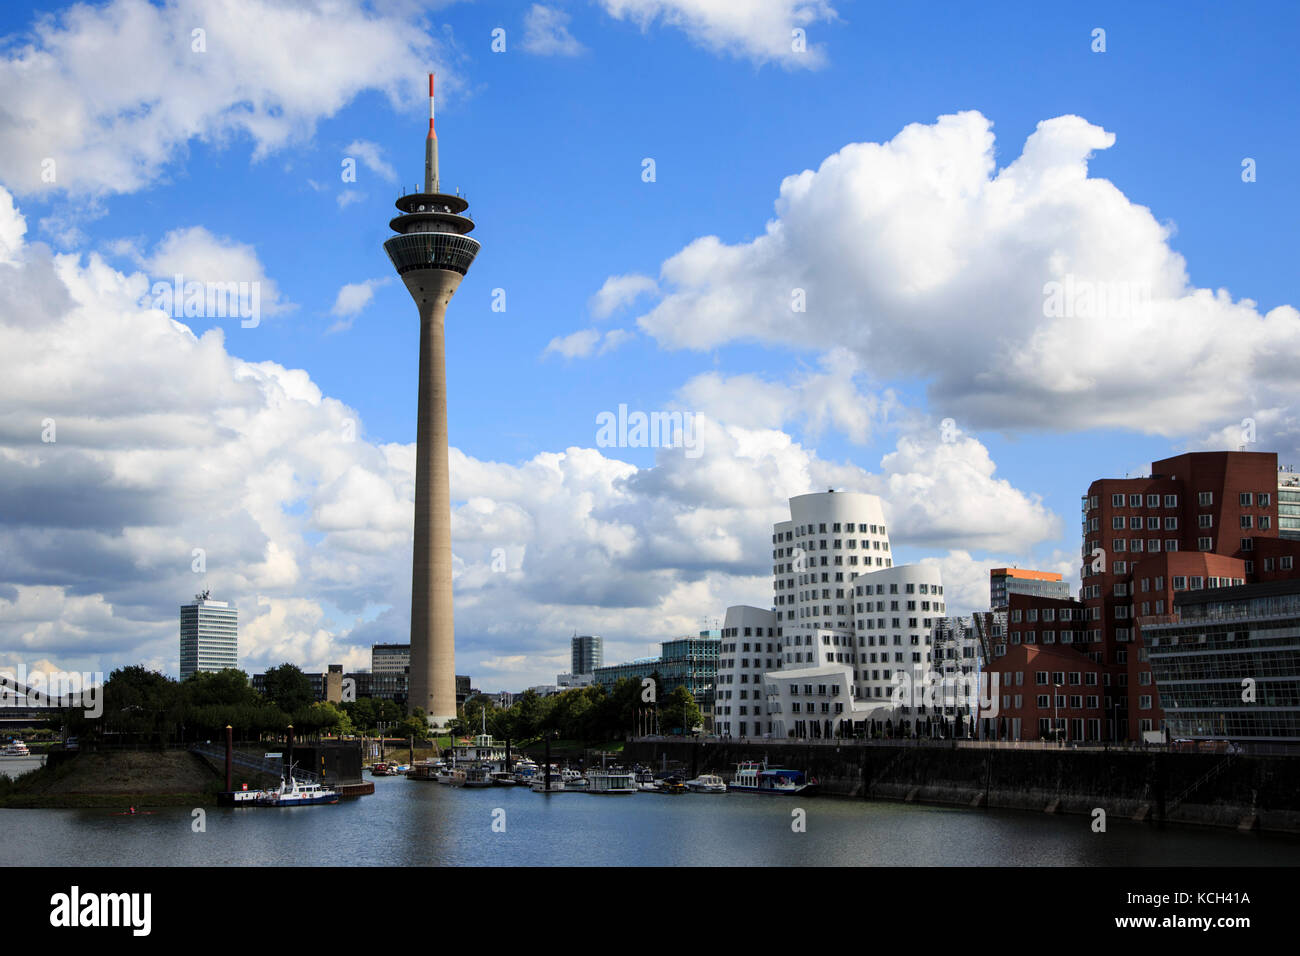 Rheinturm tower and the Gehry Building in Medienhafen, Media Harbour, Dusseldorf, Germany Stock Photo